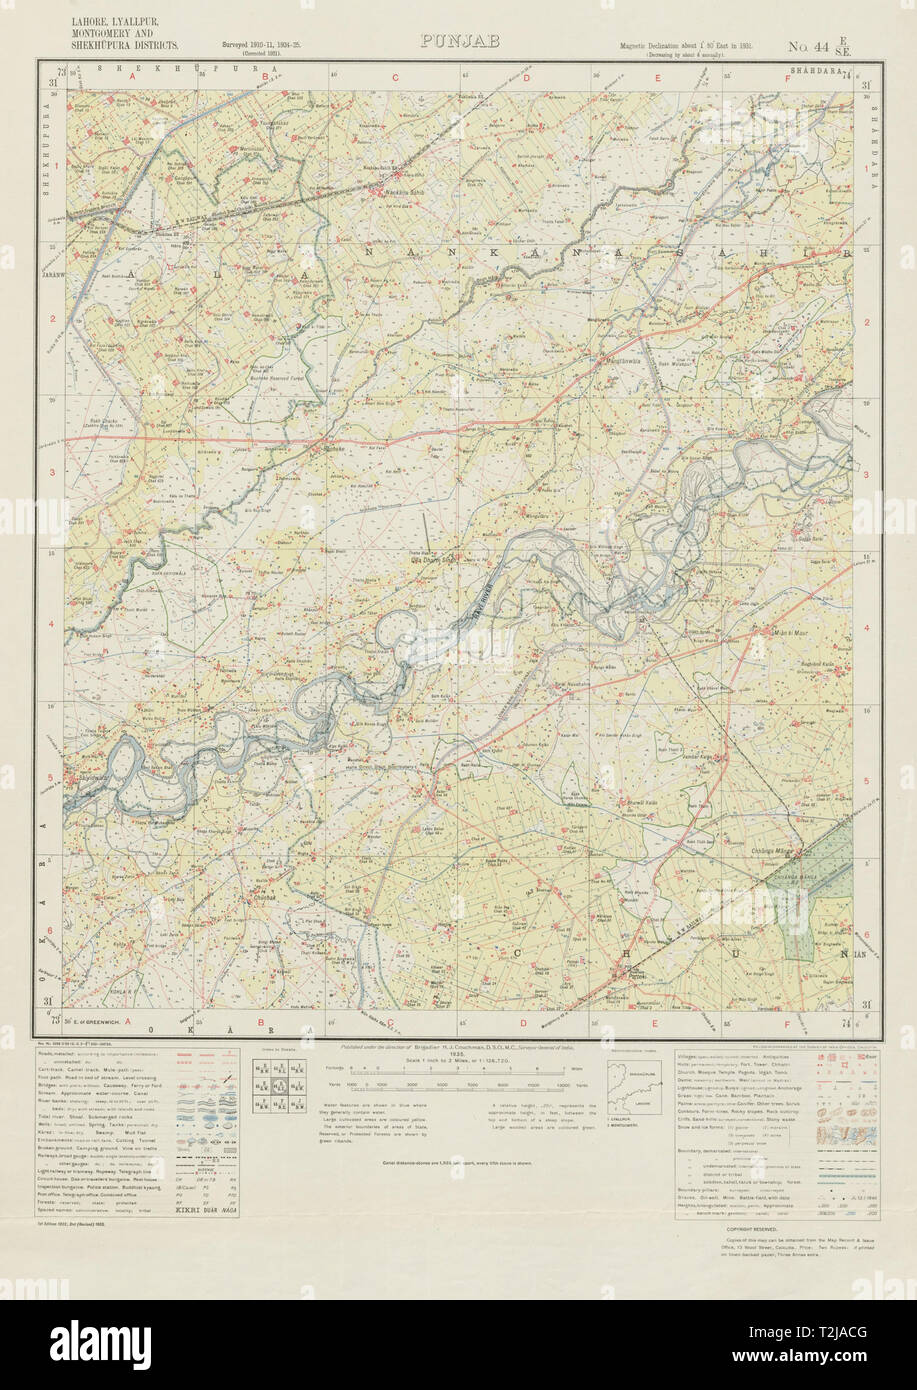 SURVEY OF INDIA 44 E/SE Pakistan Punjab Pattoki Nankana Sahib Phool Nag 1935 map Stock Photo